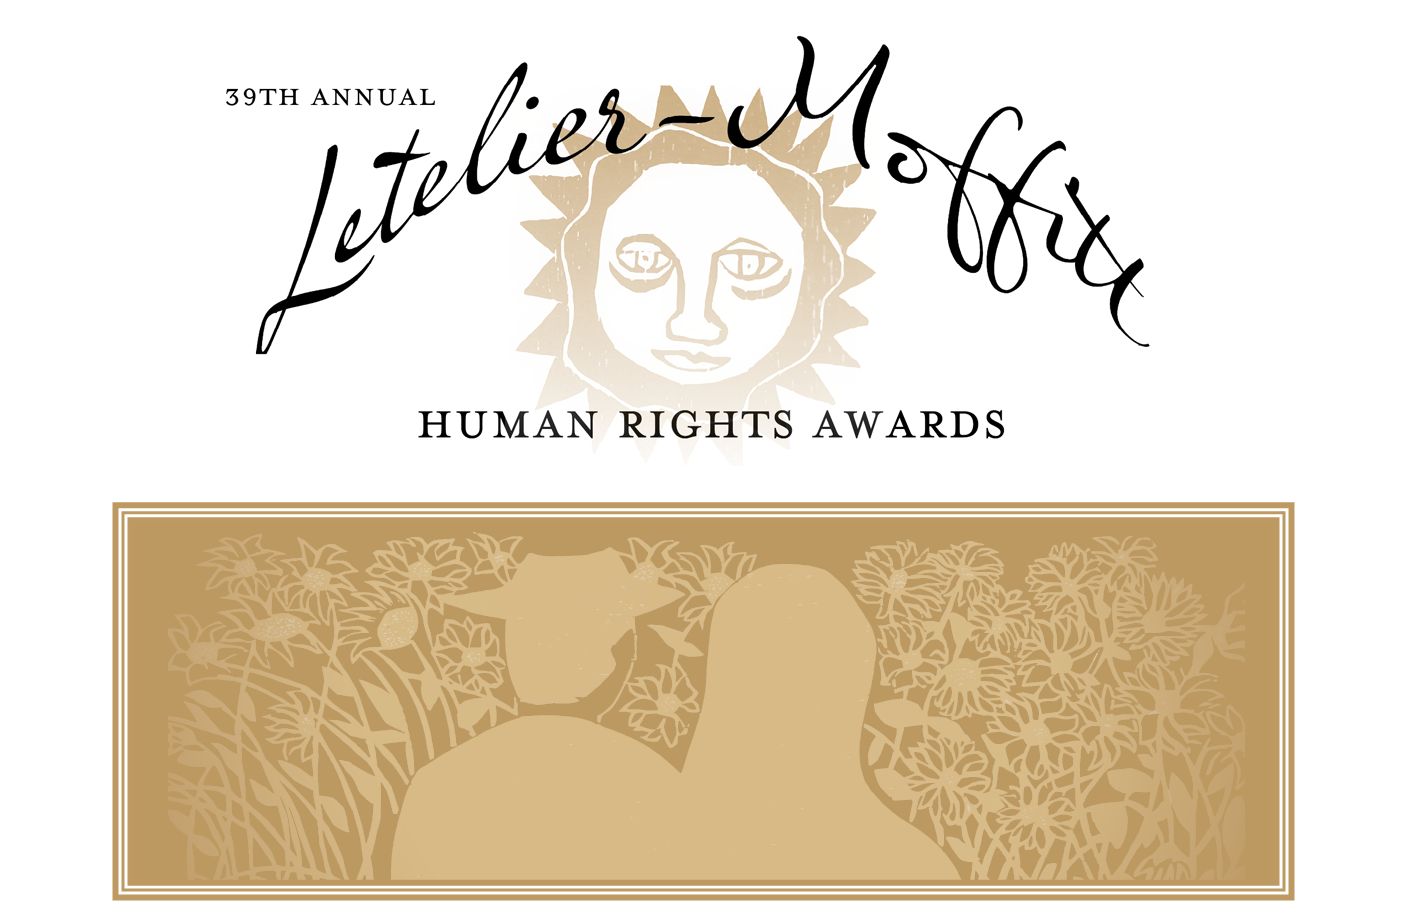 39th Annual Letelier-Moffitt Human Rights Awards